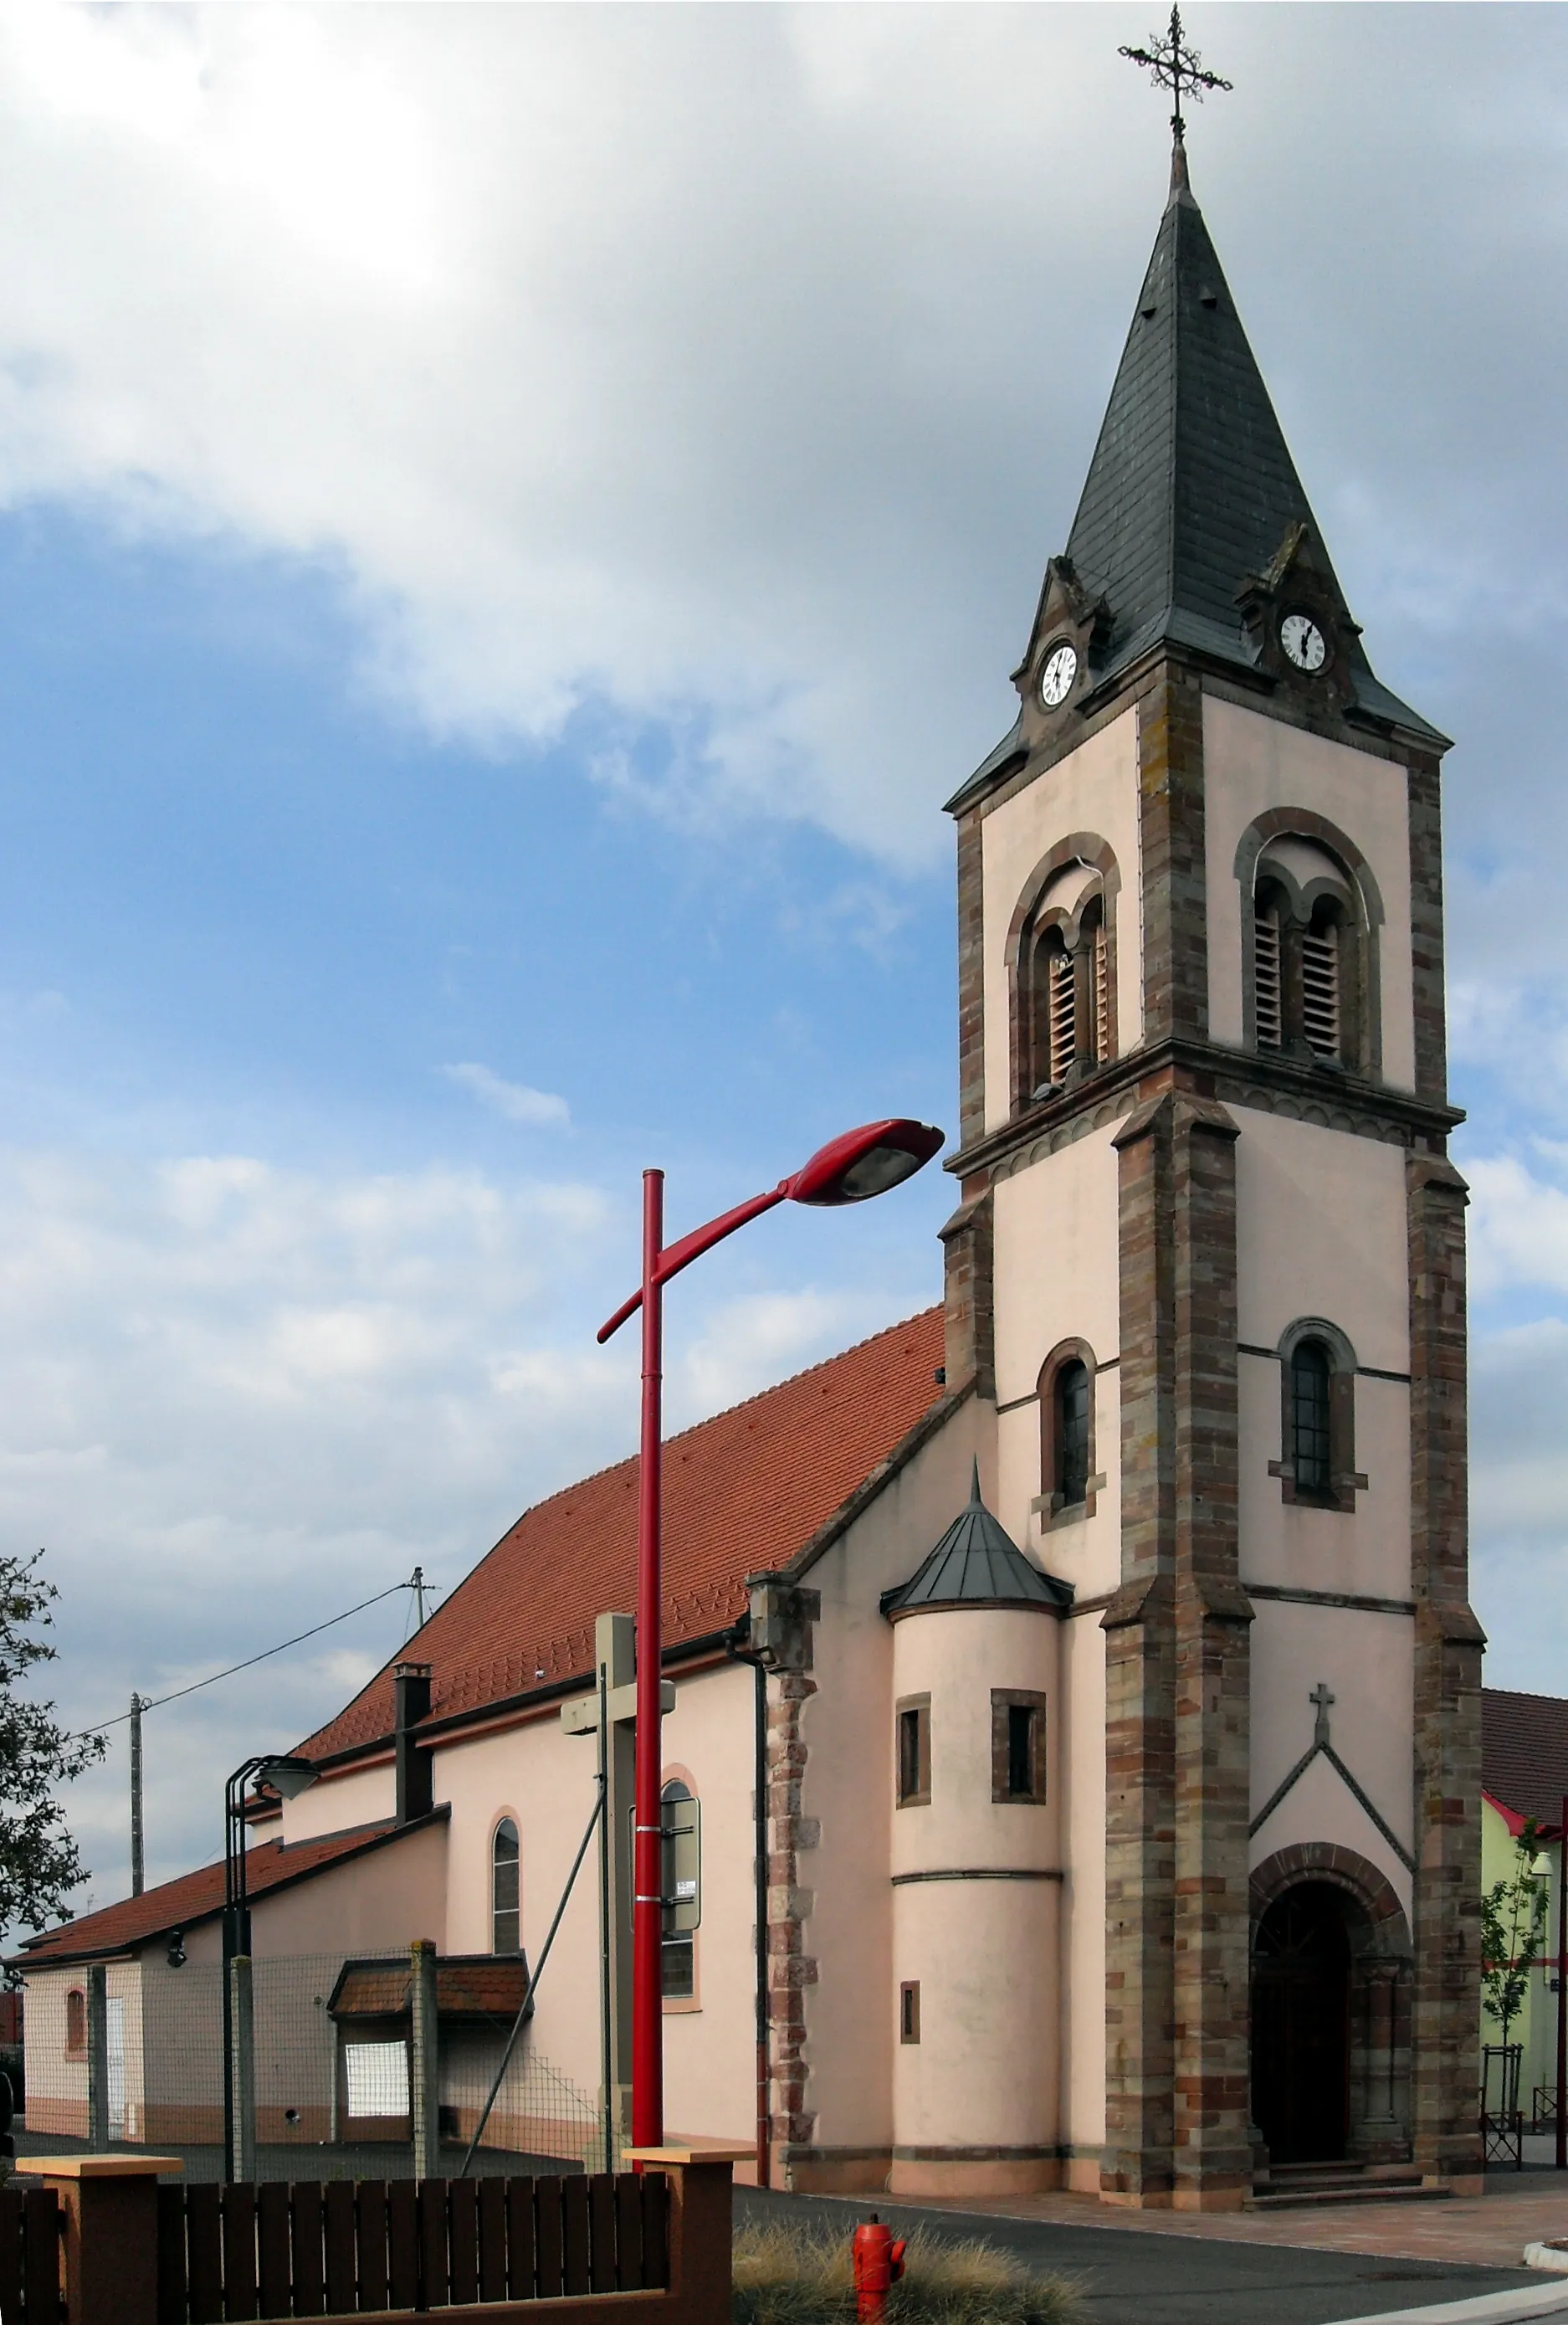 Image of Staffelfelden